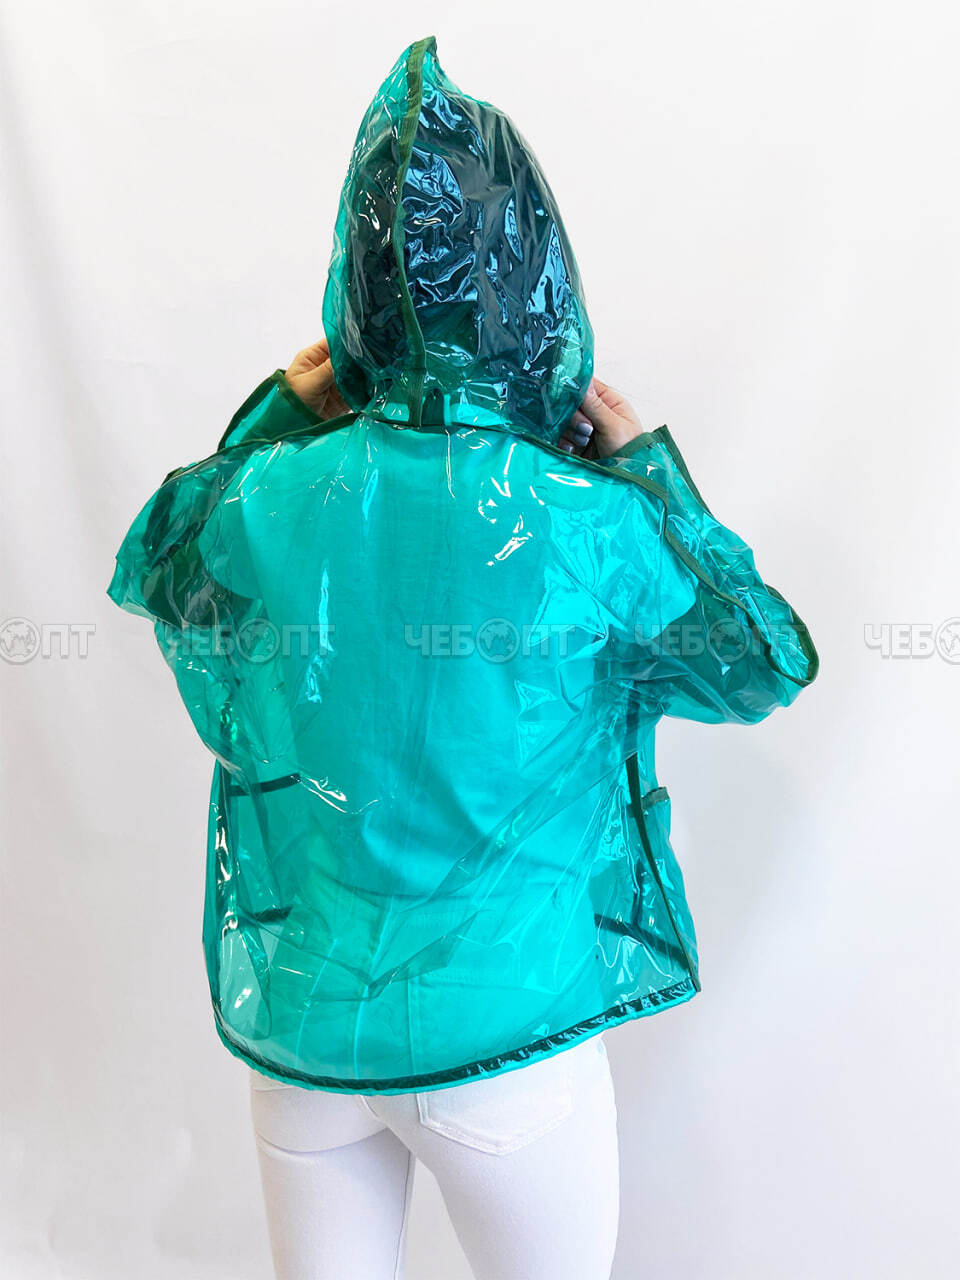 Куртка дождевик на молнии,ЧЕБПРО,цветная пленка, размер 46-50,100% пленка ПВХ, Арт.КурПЛЕНКА/зеленый, МПС [3/15] СобПр. ЧЕБОПТ.